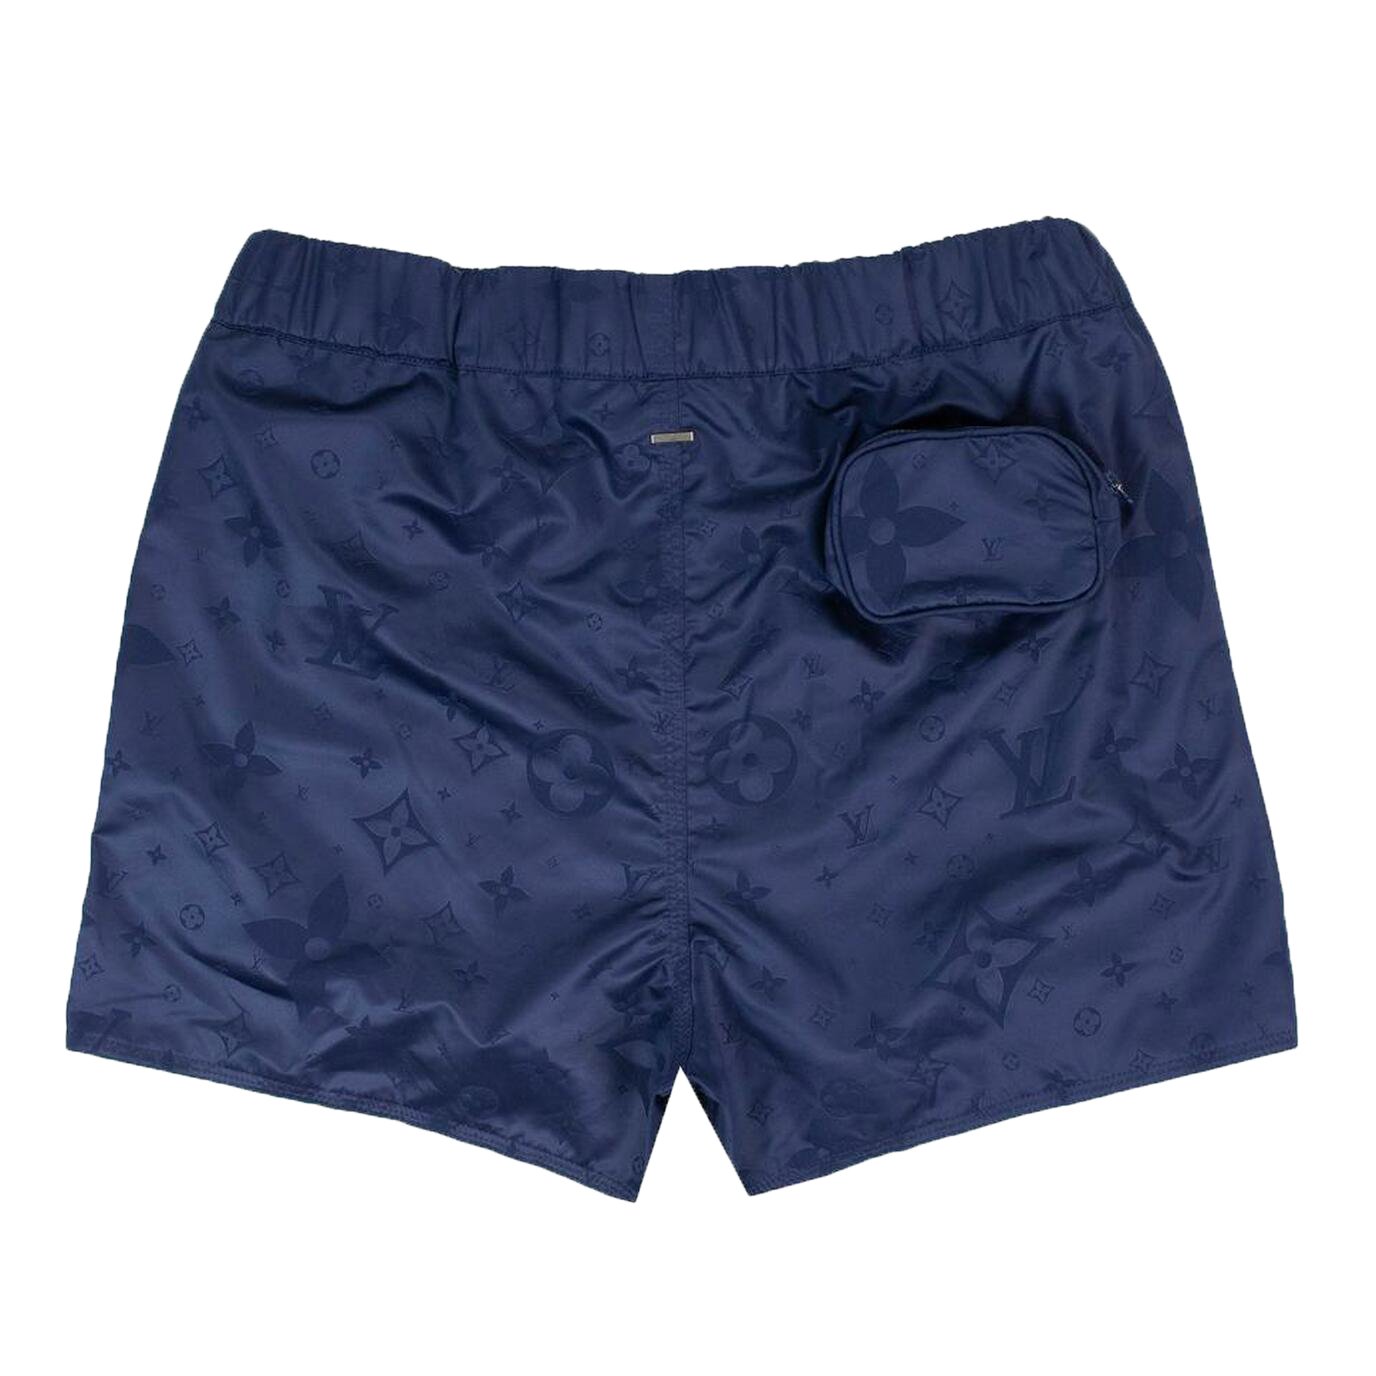 Louis Vuitton Swim Short with 2 Pockets, Brand